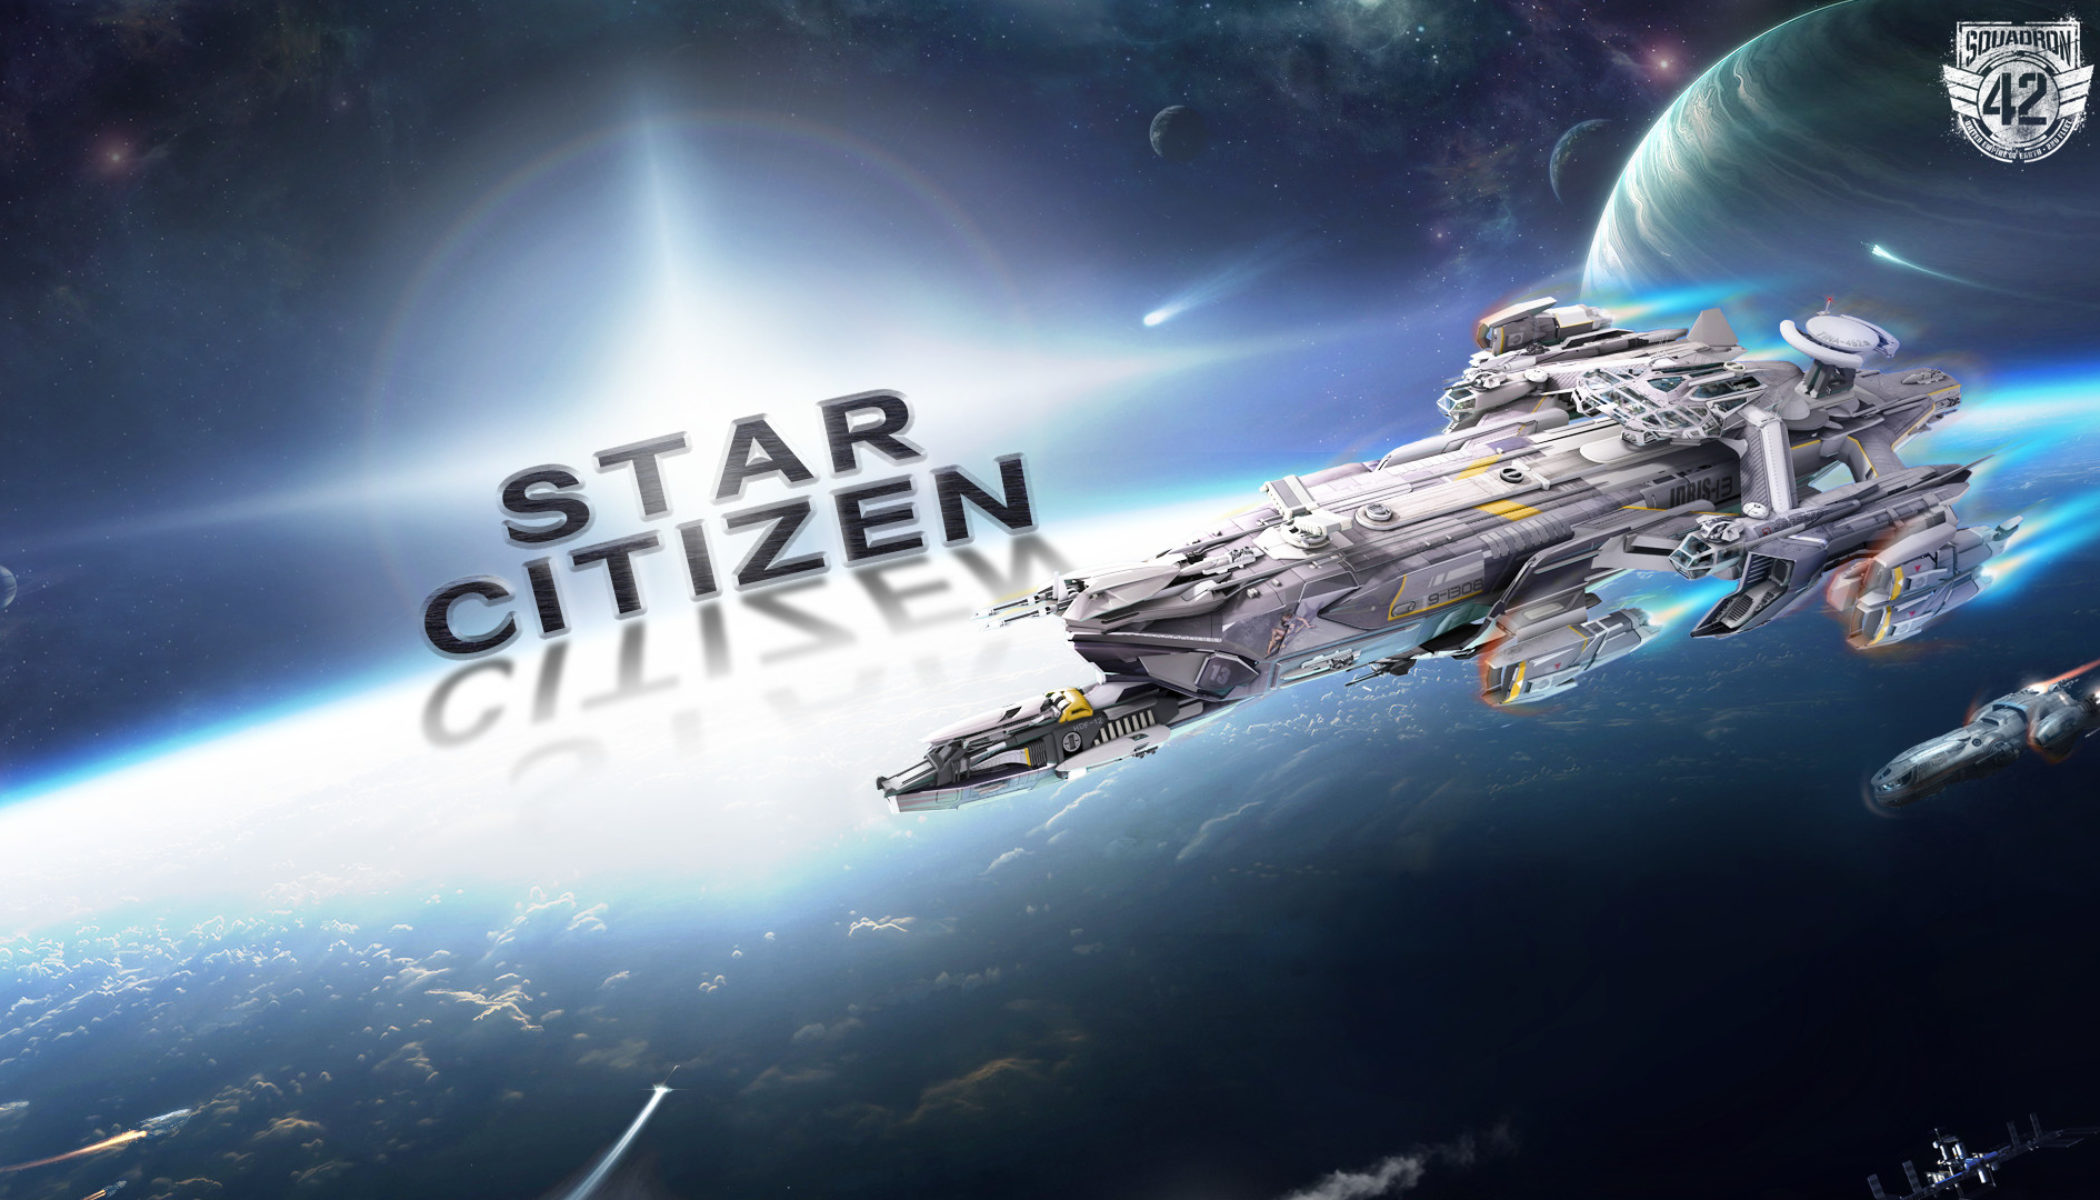 Release Date - Star Citizen